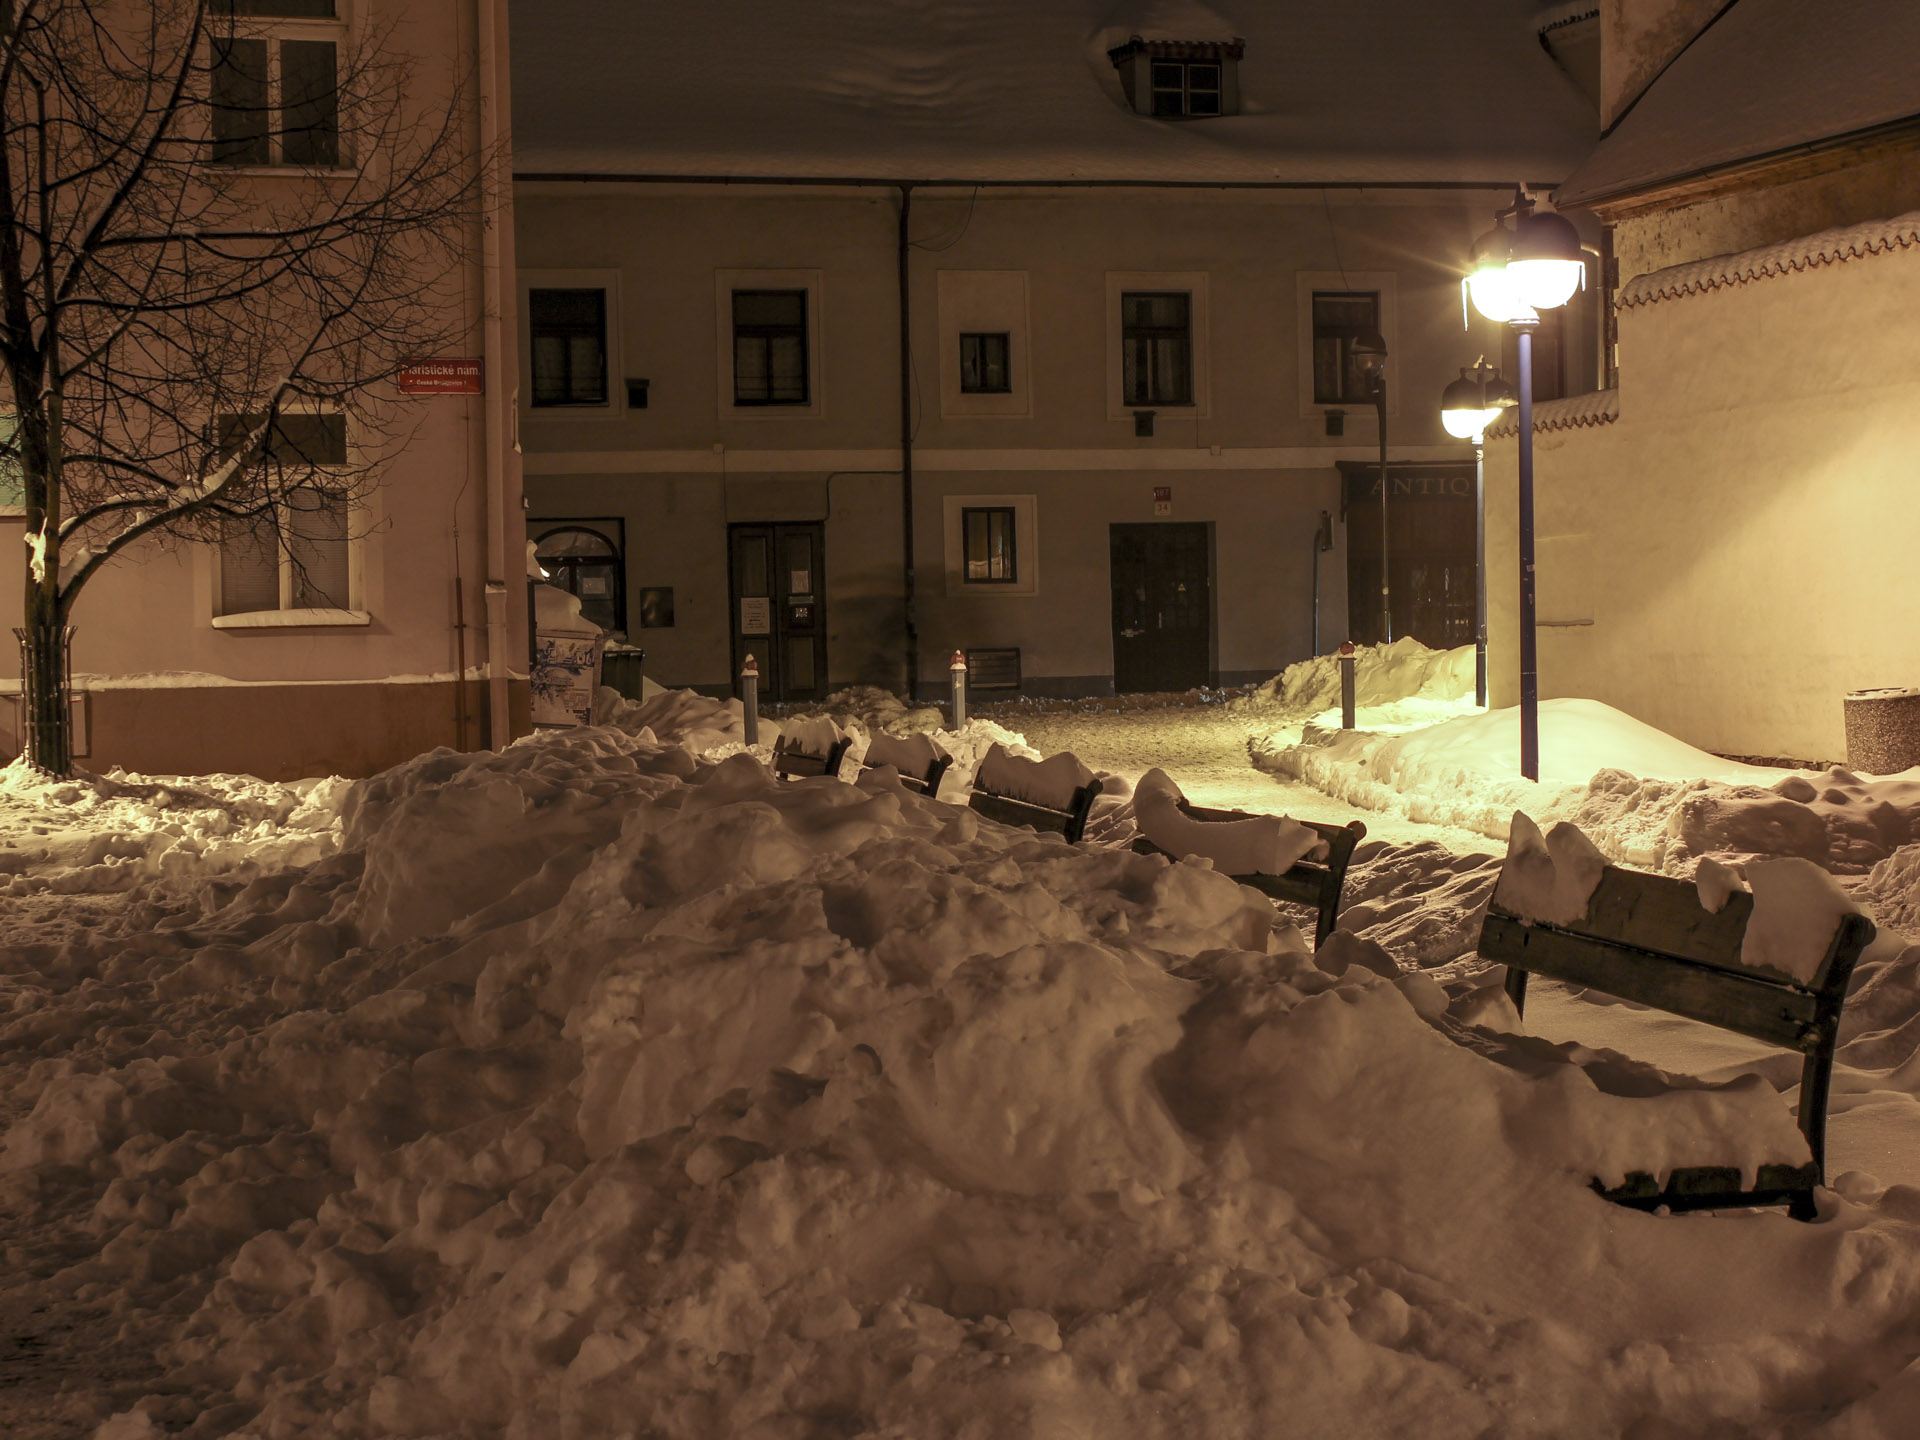 Next pigeonhole => The Kingdom of Snow // Petr Nuska - Photography  - woreshack.cz